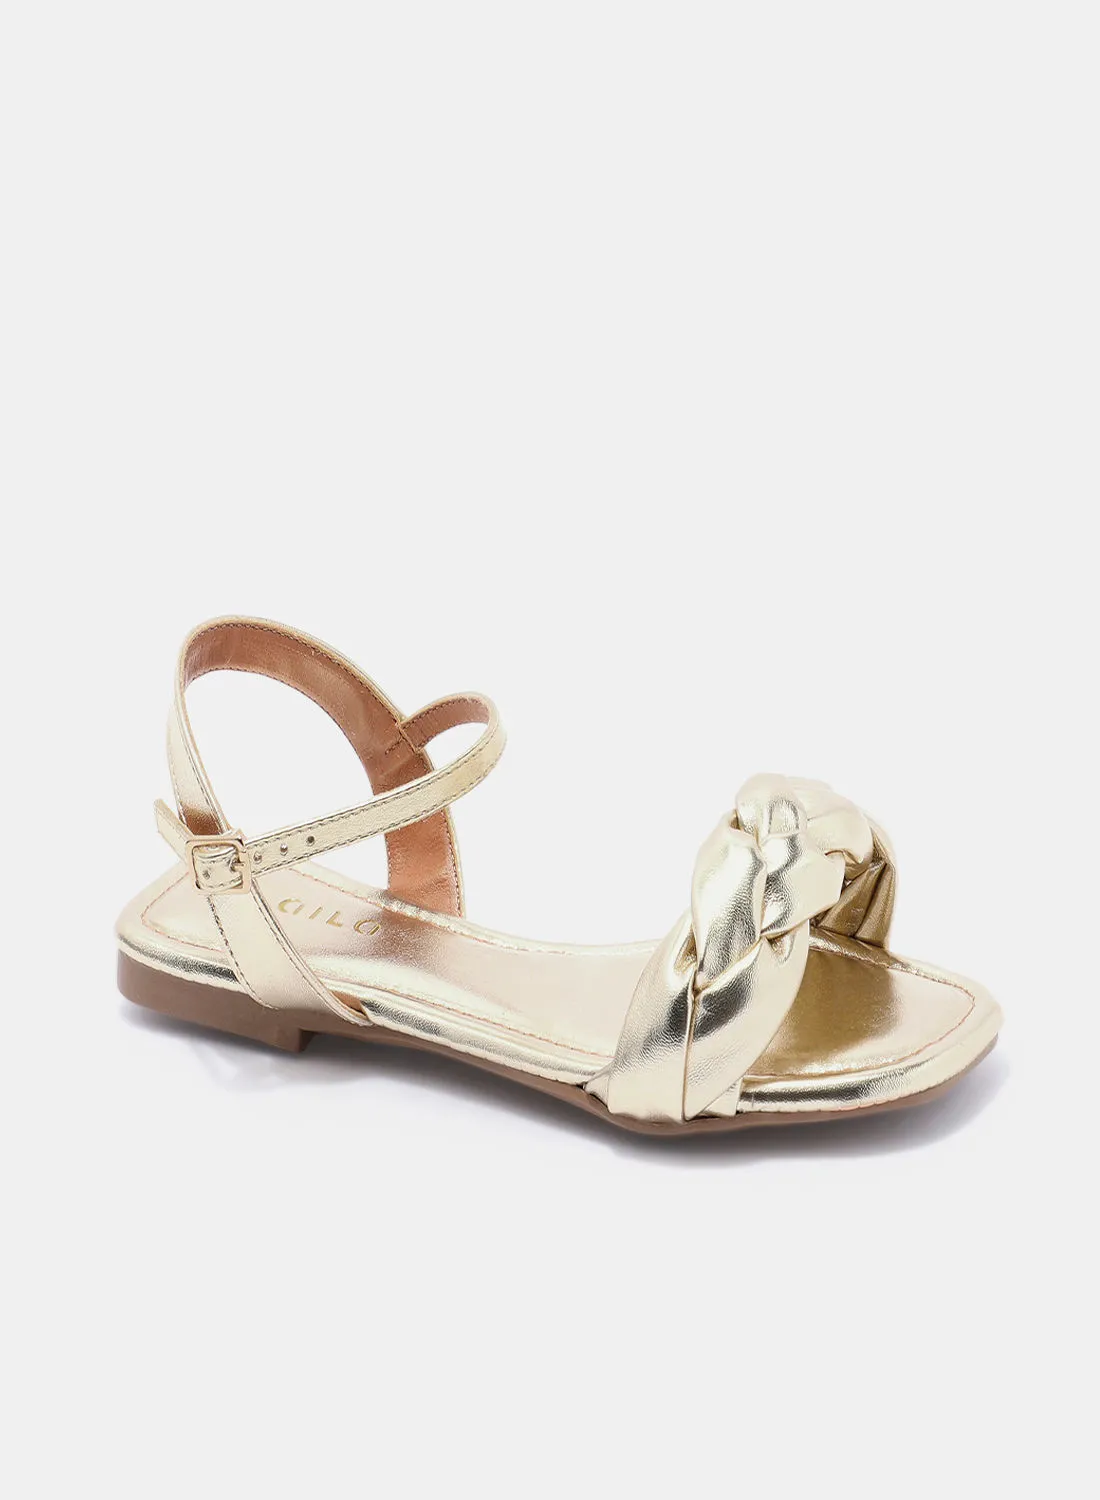 Aila Casual Plain Flat Sandals Gold